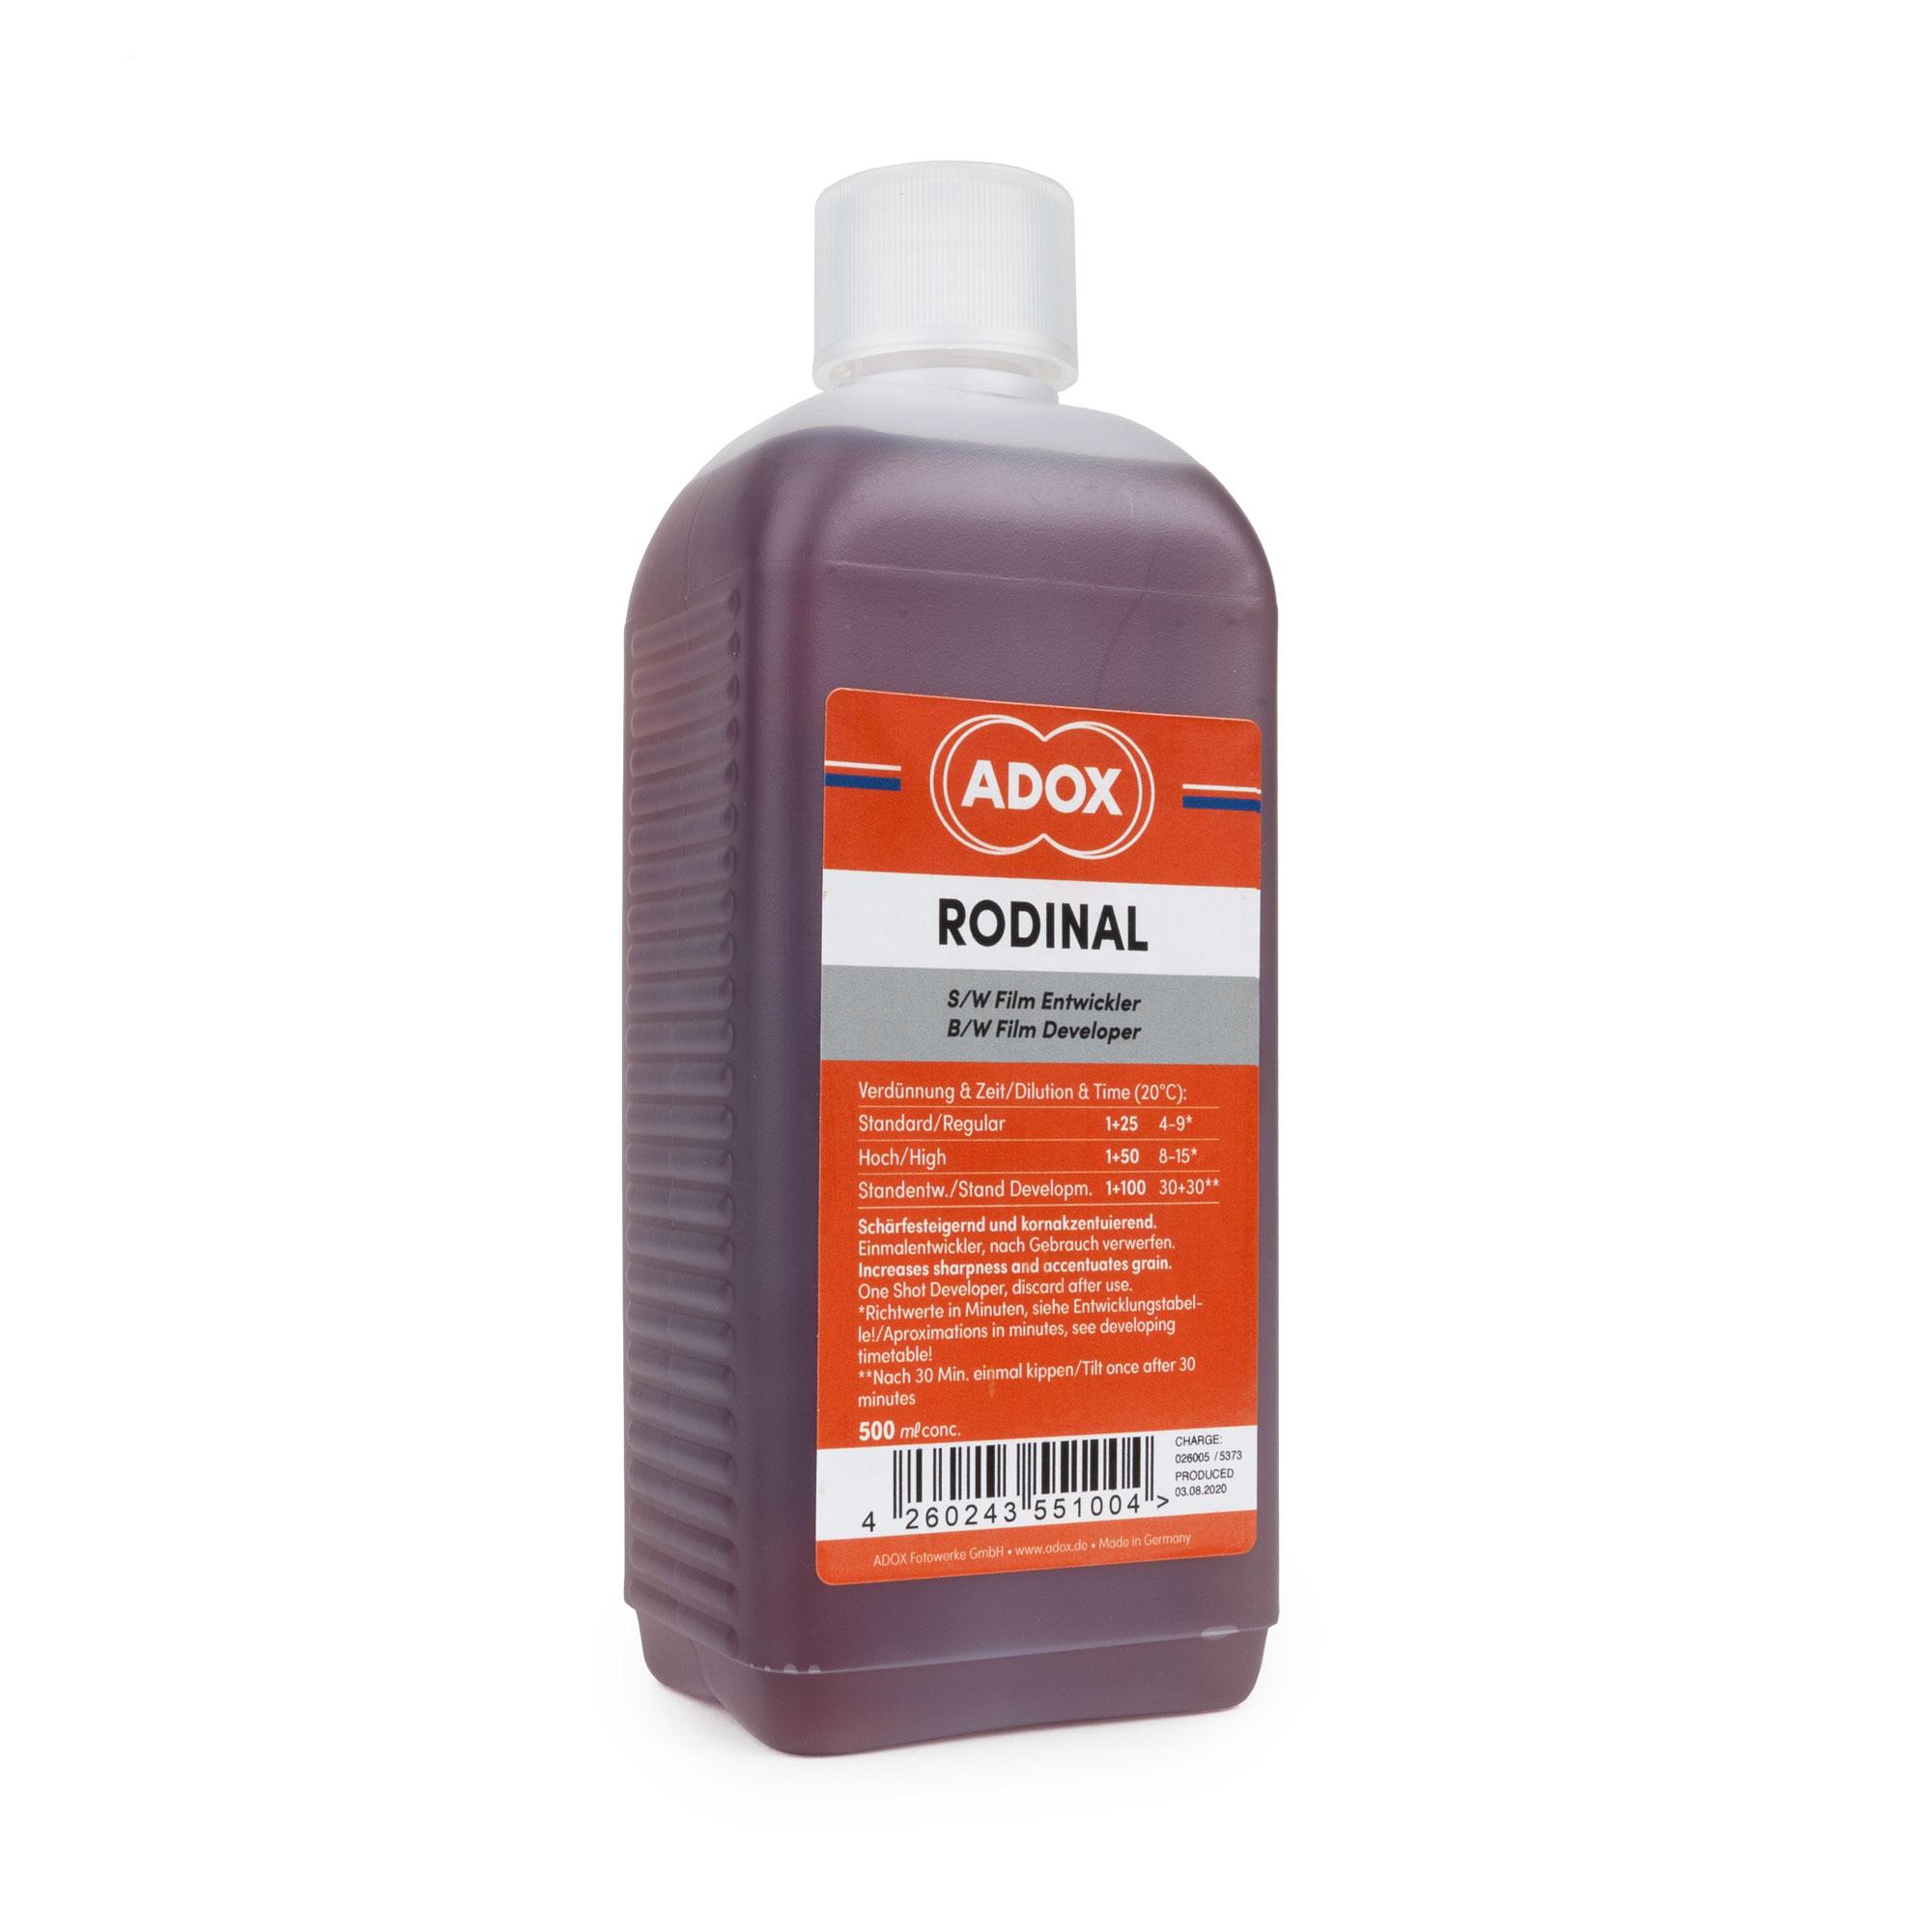 ADOX ADONAL/RODINAL 500 ml Konzentrat